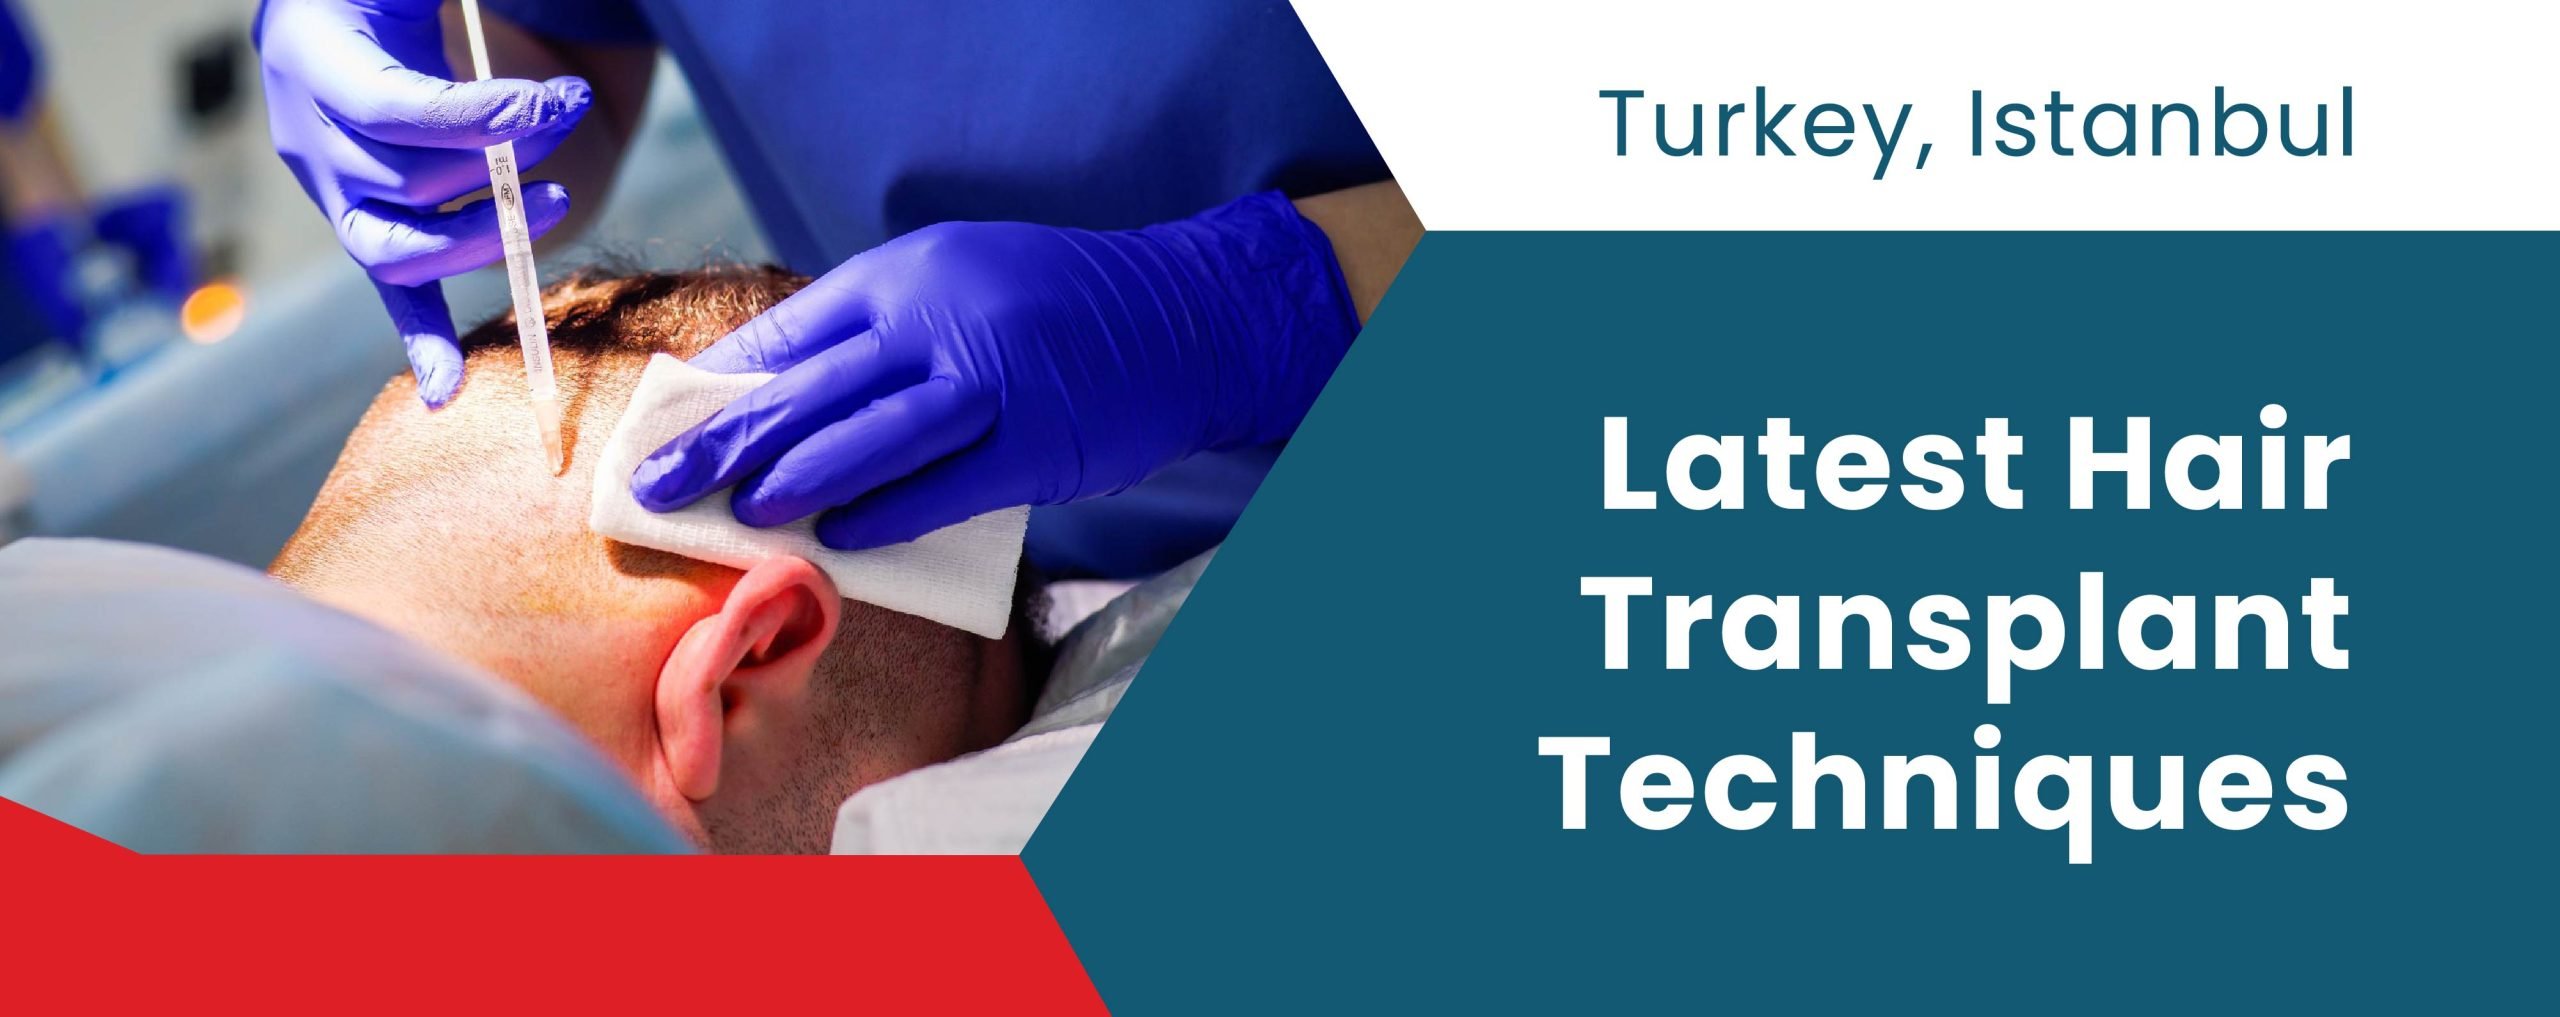 Latest Hair Transplant Techniques in Turkey | ClinMedica